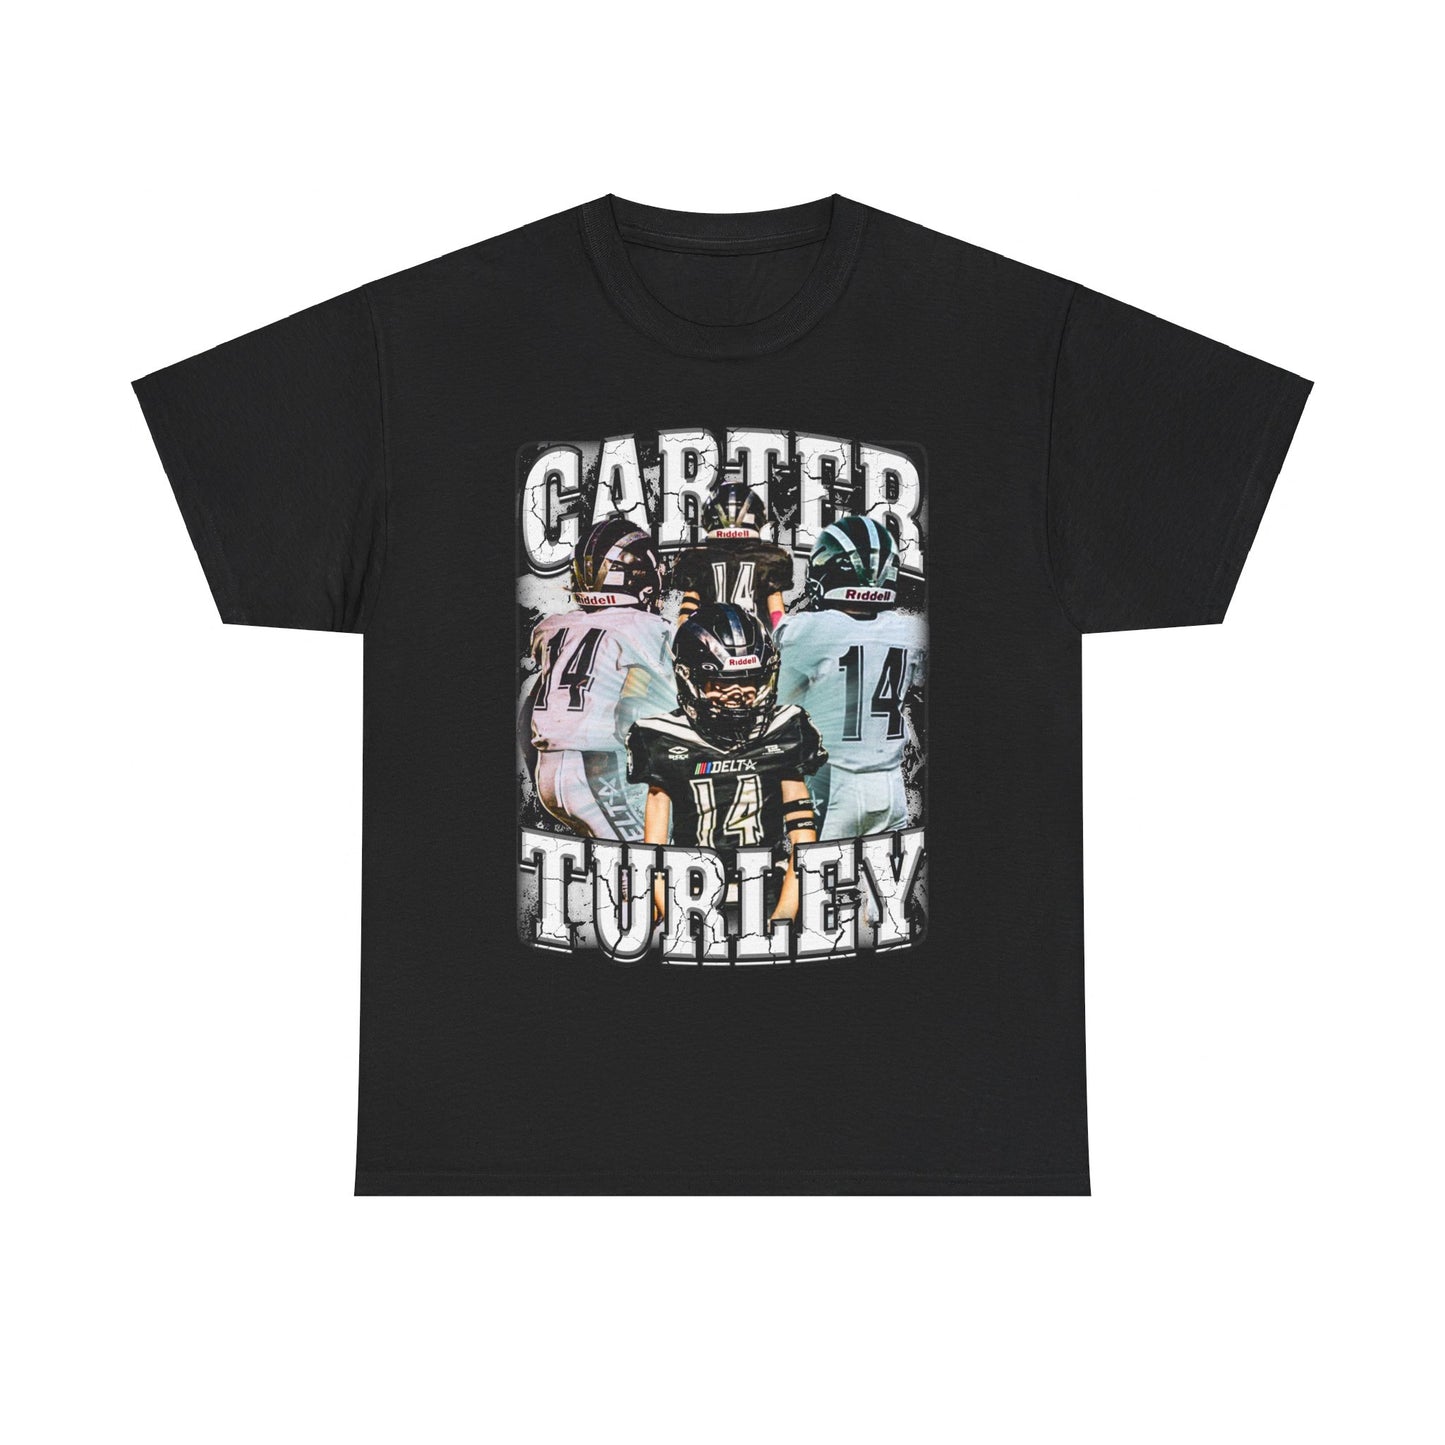 Carter Turley Heavy Cotton Tee